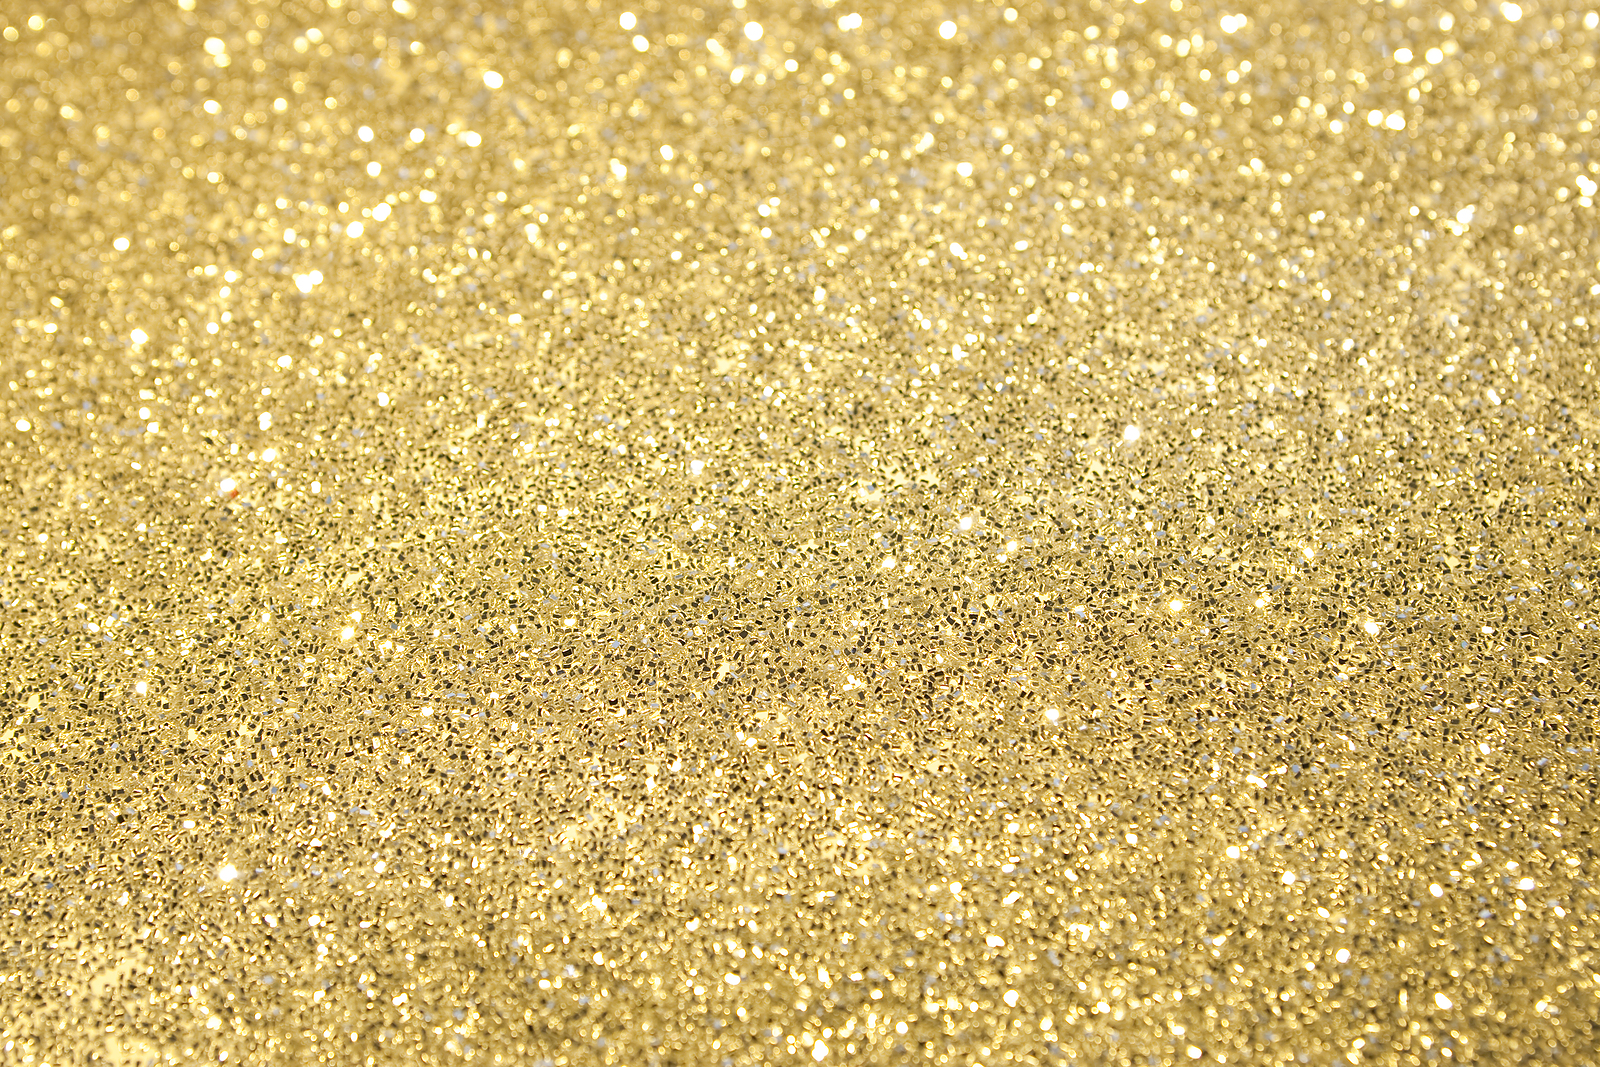 Glitter Pictures Bigstock Gold